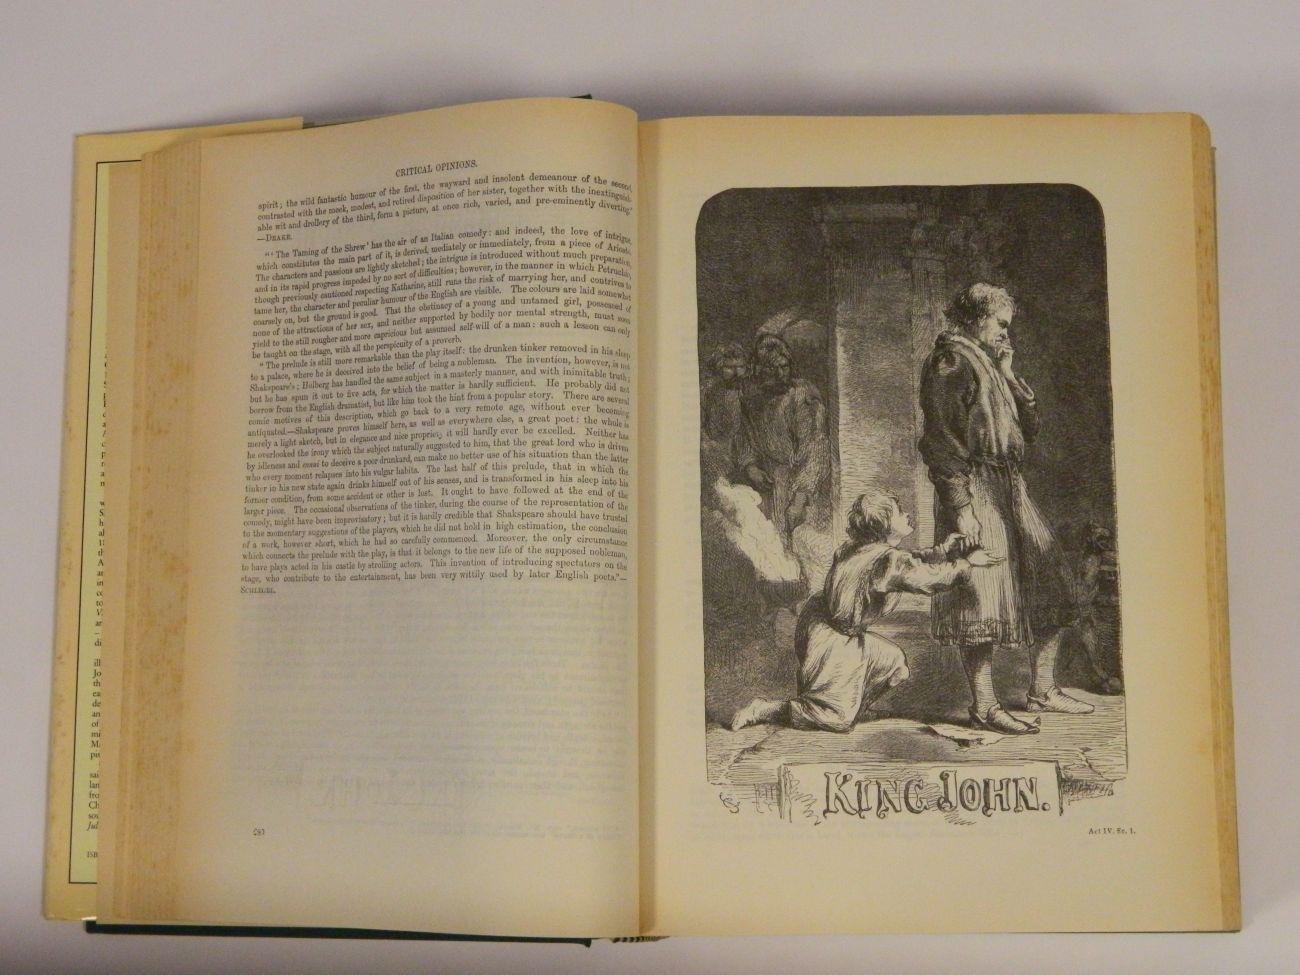 Staunton, Howard - The complete illustrated Shakespeare